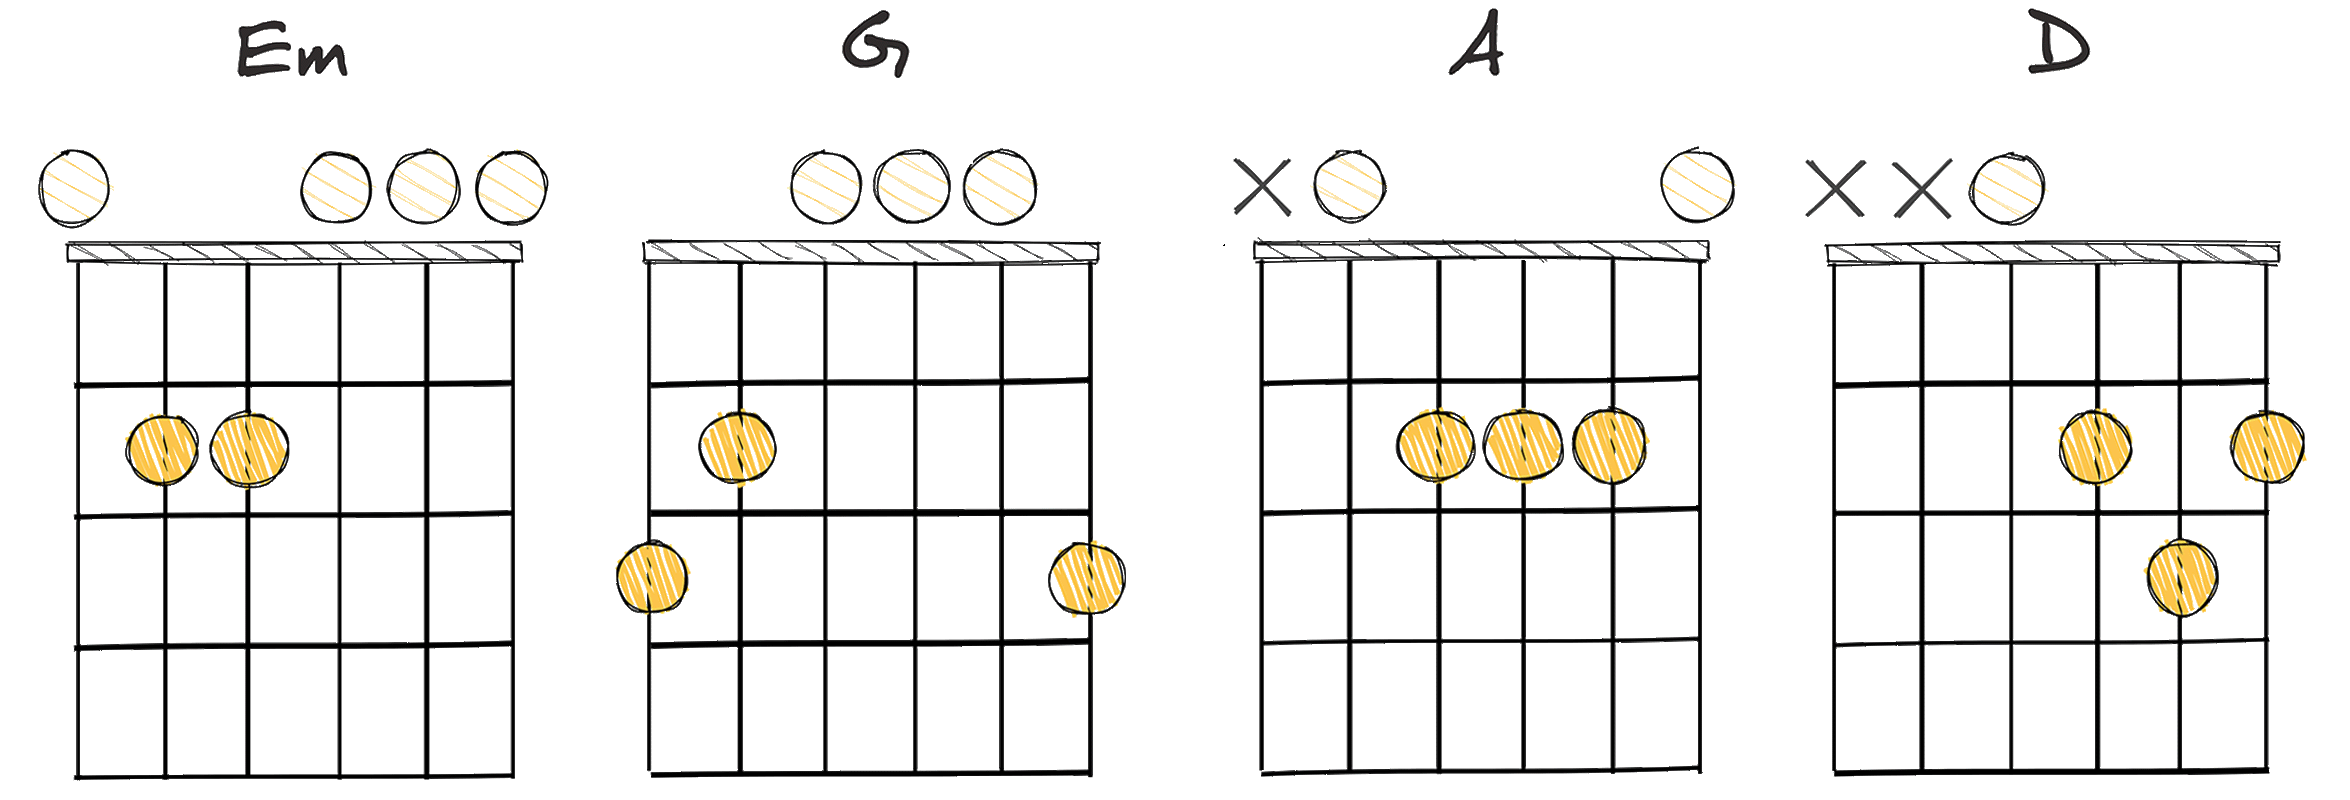 ii-IV-V-I (2-4-5-1) chords diagram